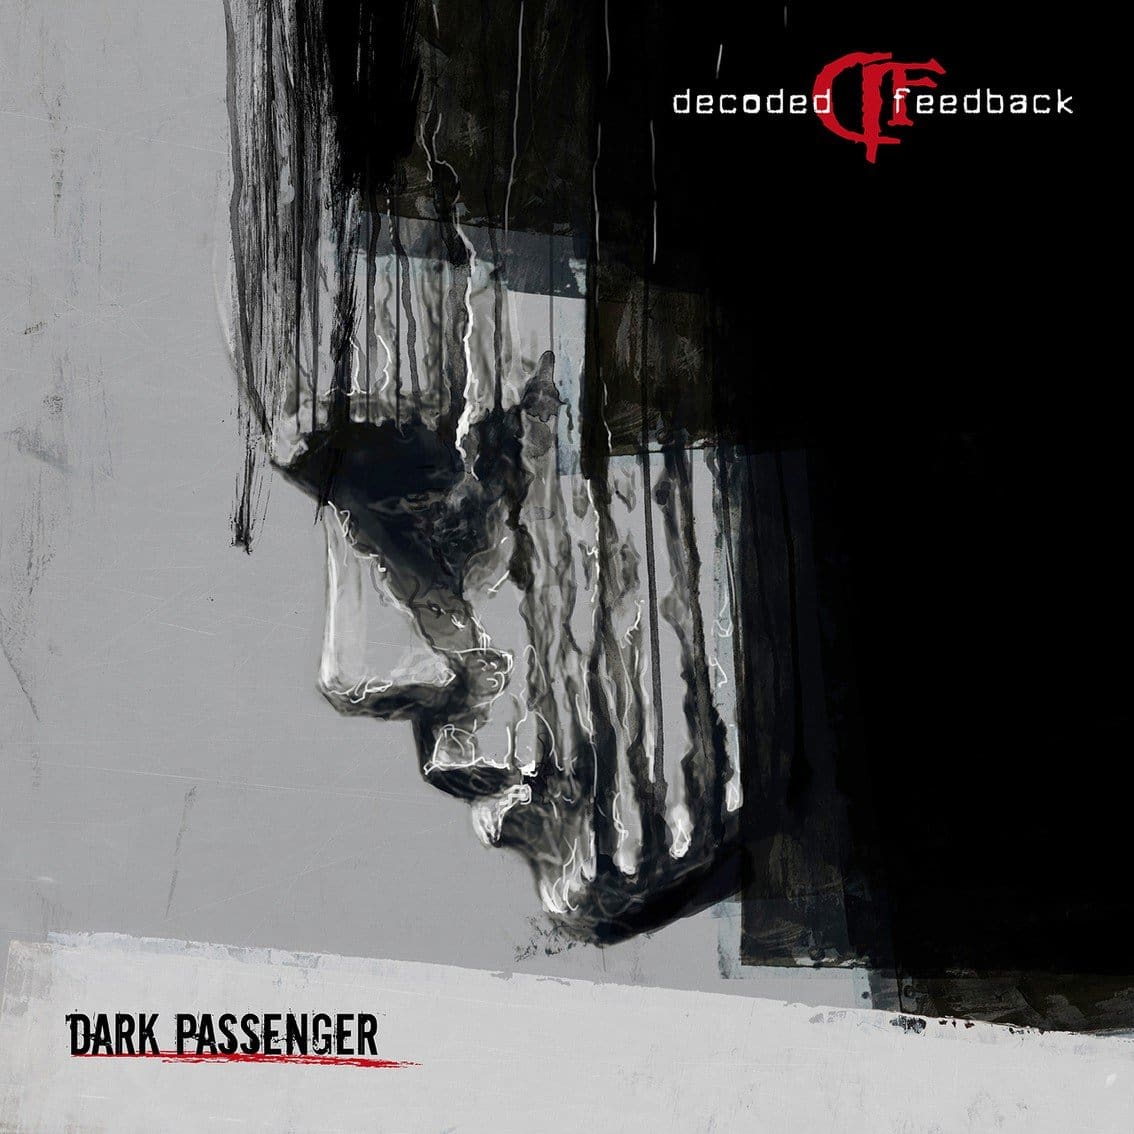 Decoded Feedback returns with 'Dark Passenger' album - listen to the first single!